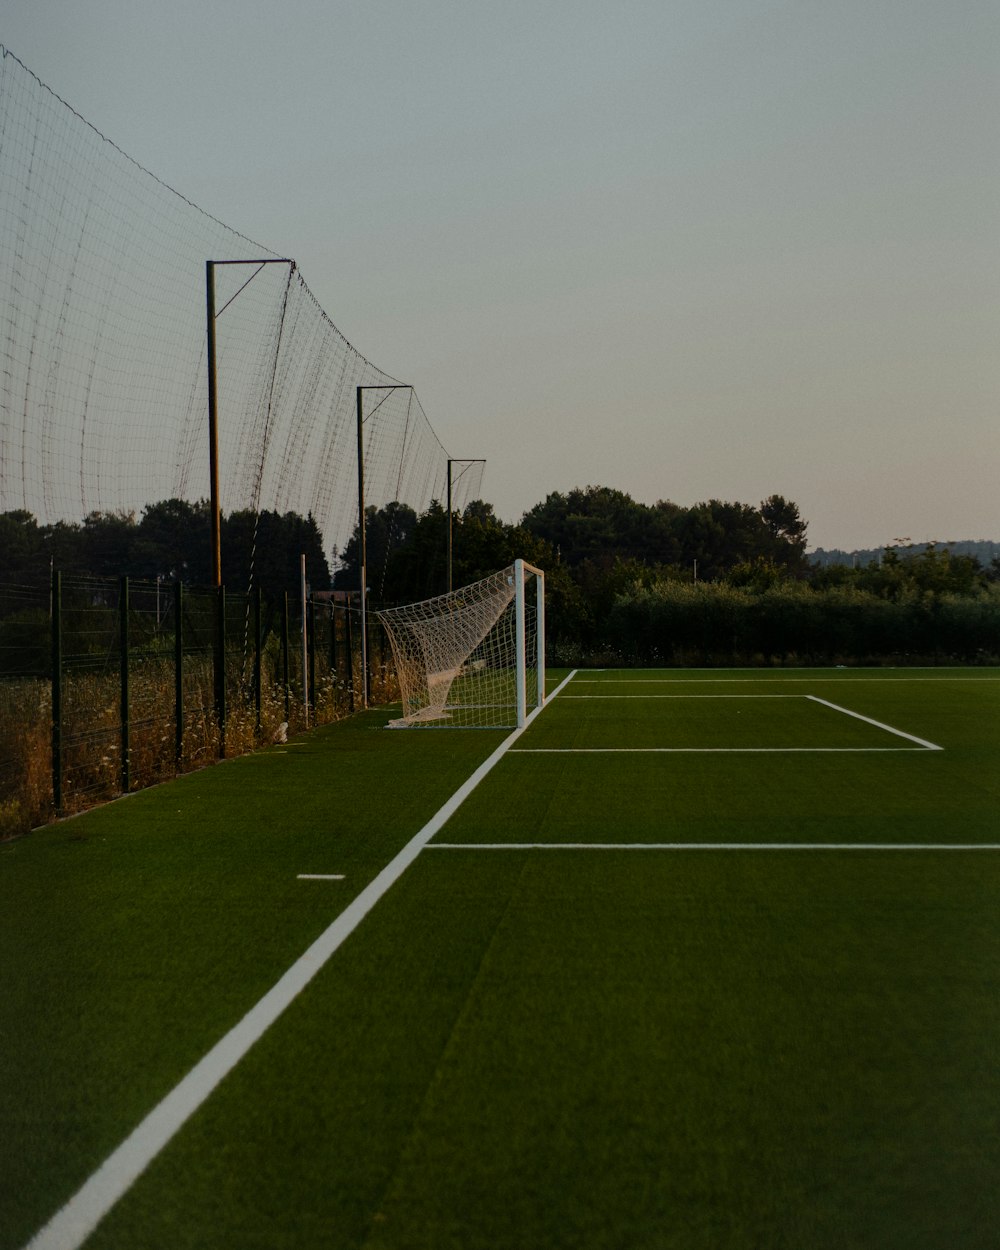 soccer goal net on green grass field during daytime